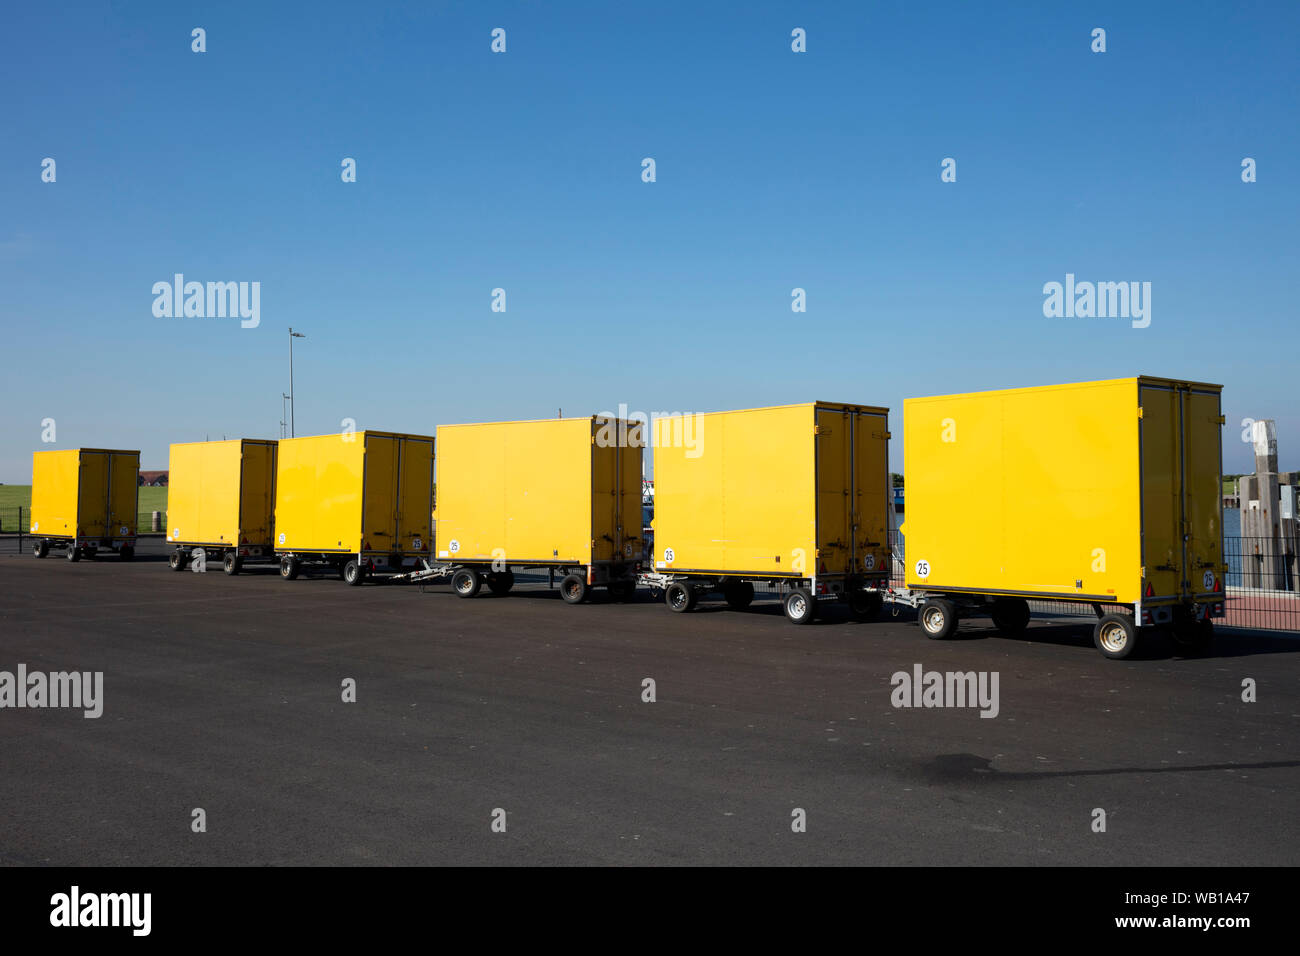 Germany, Deutsche Post, yellow trailers Stock Photo